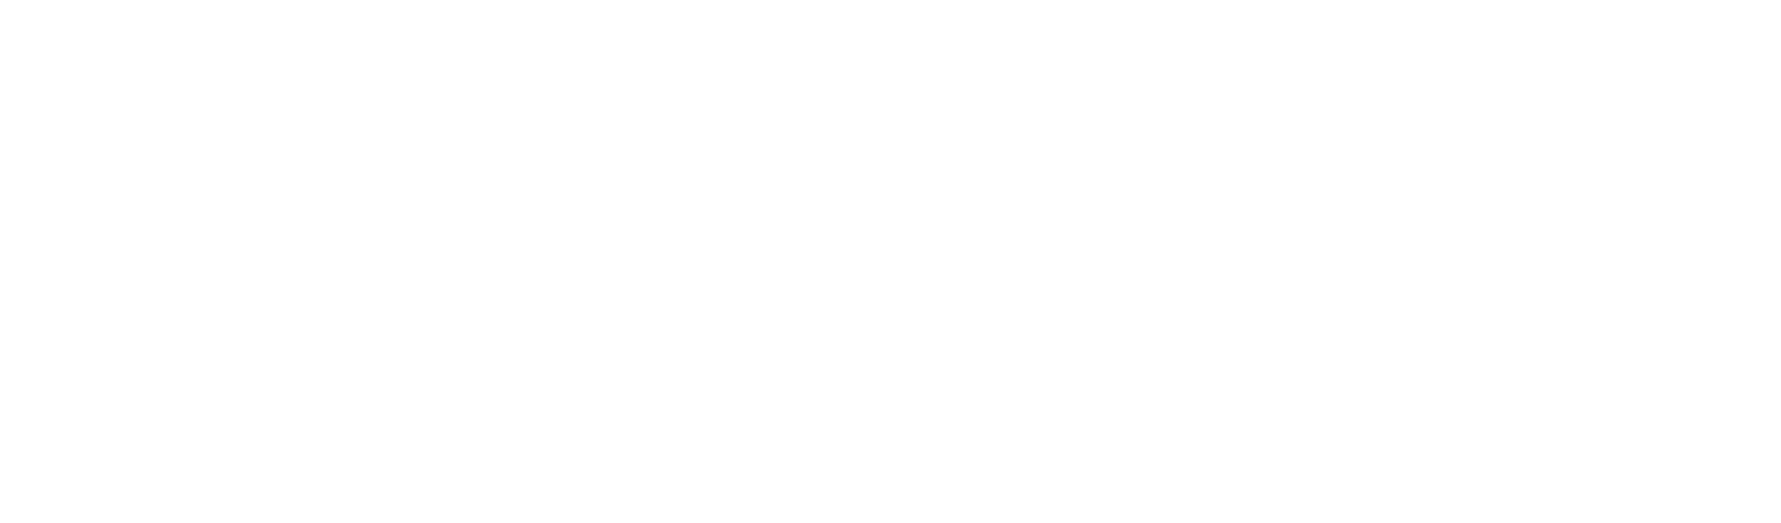 BXR logo no R w